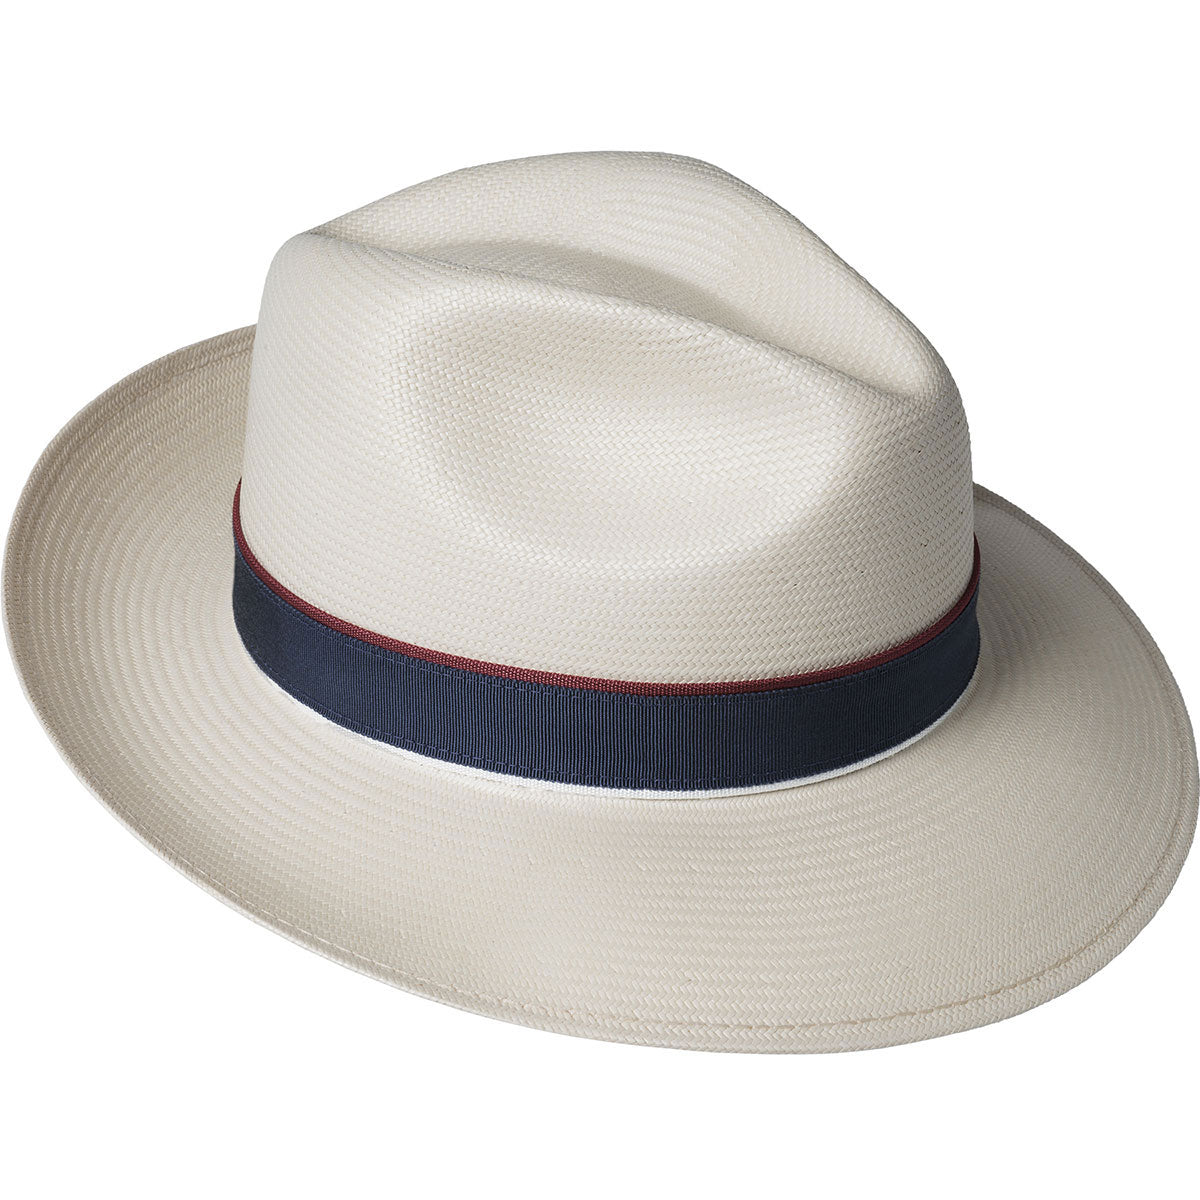 Bailey Relik Panama Hat